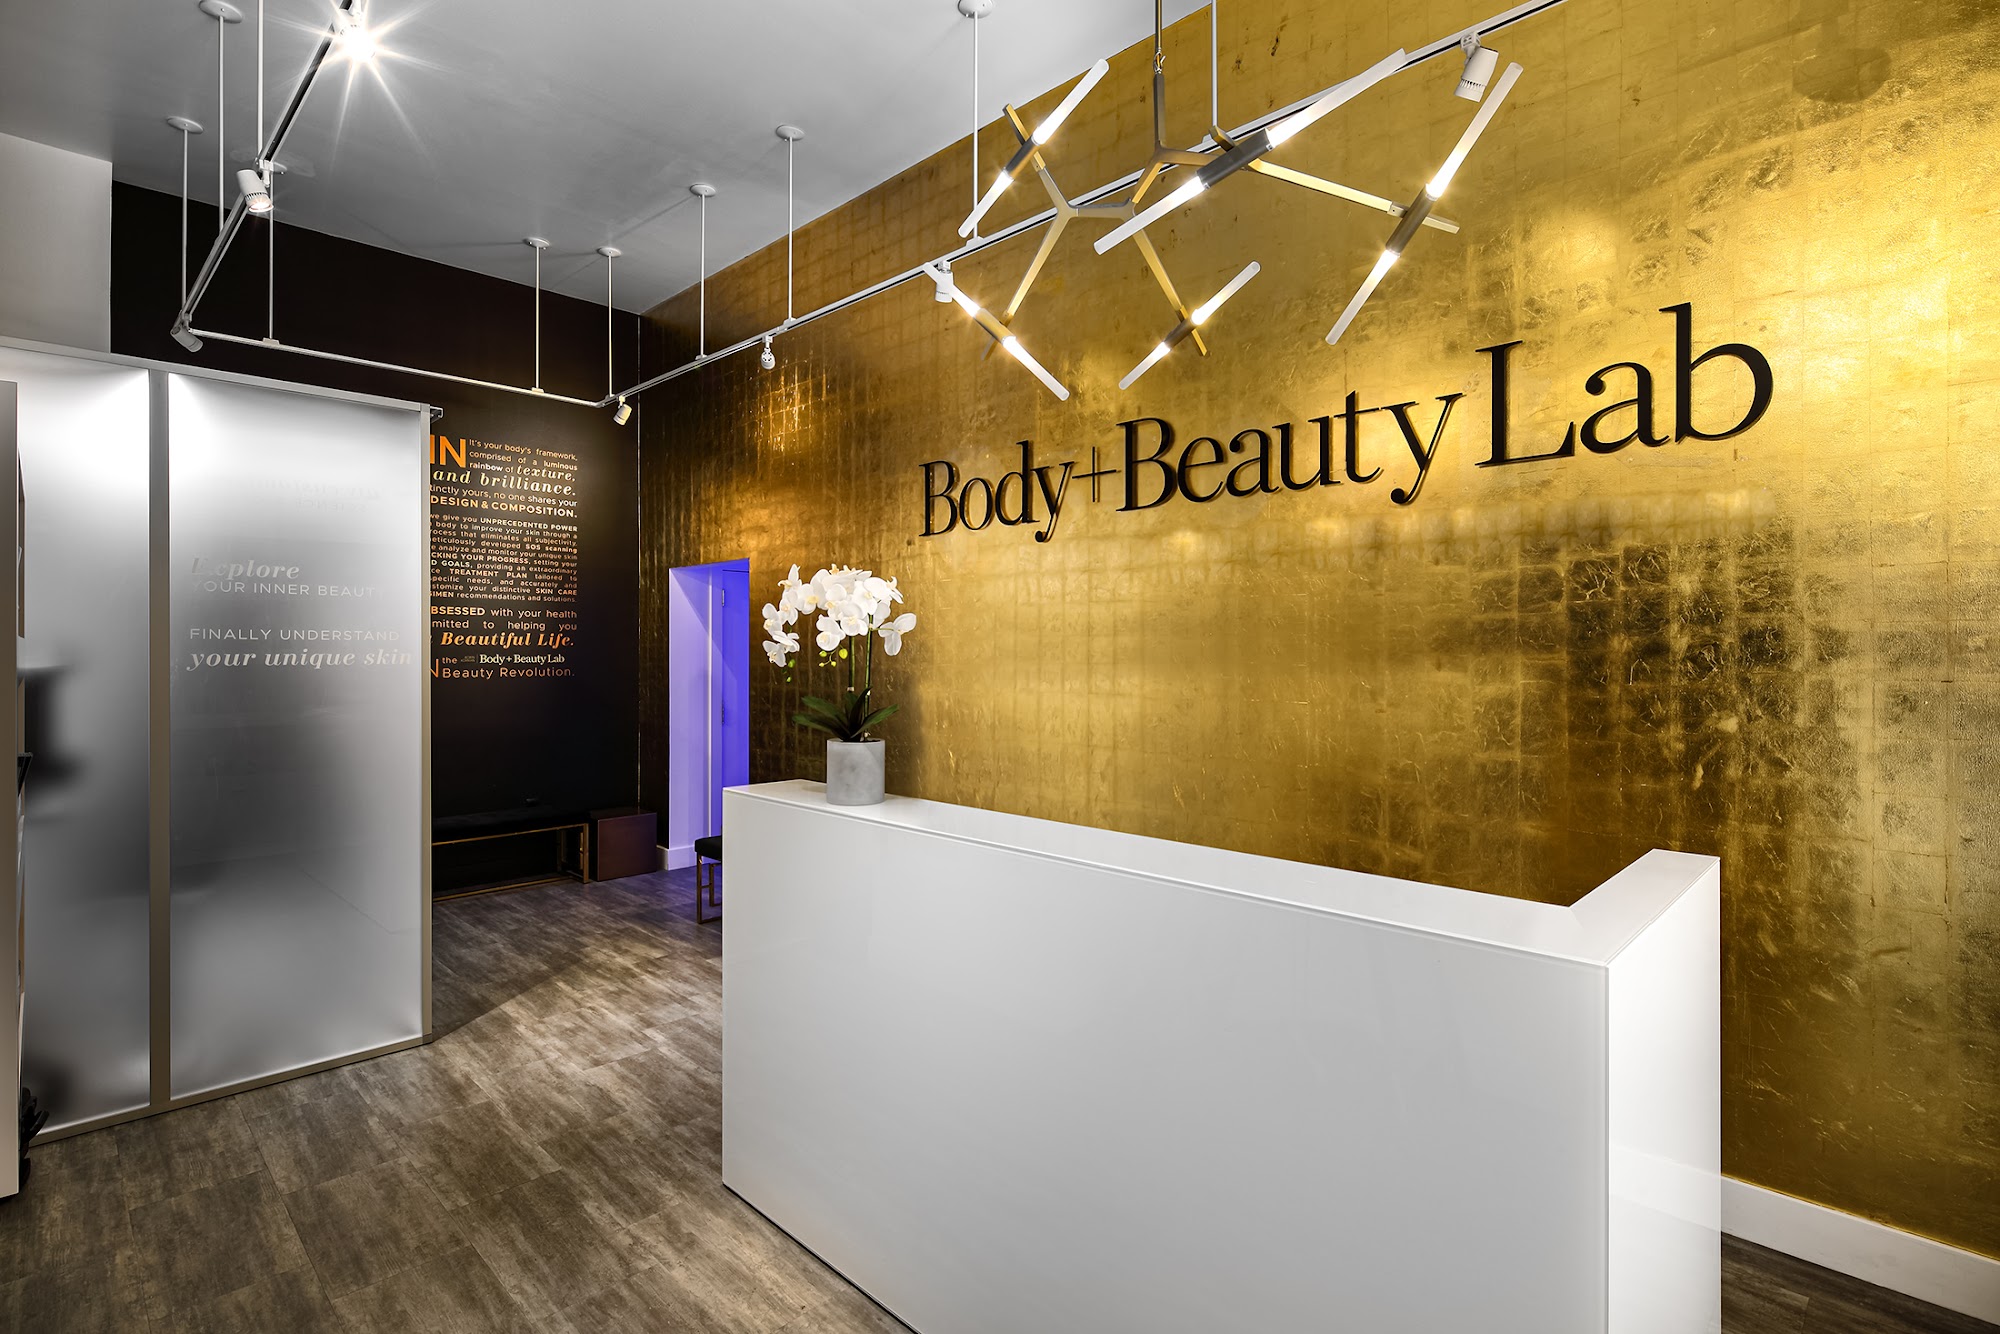 Body+Beauty Lab